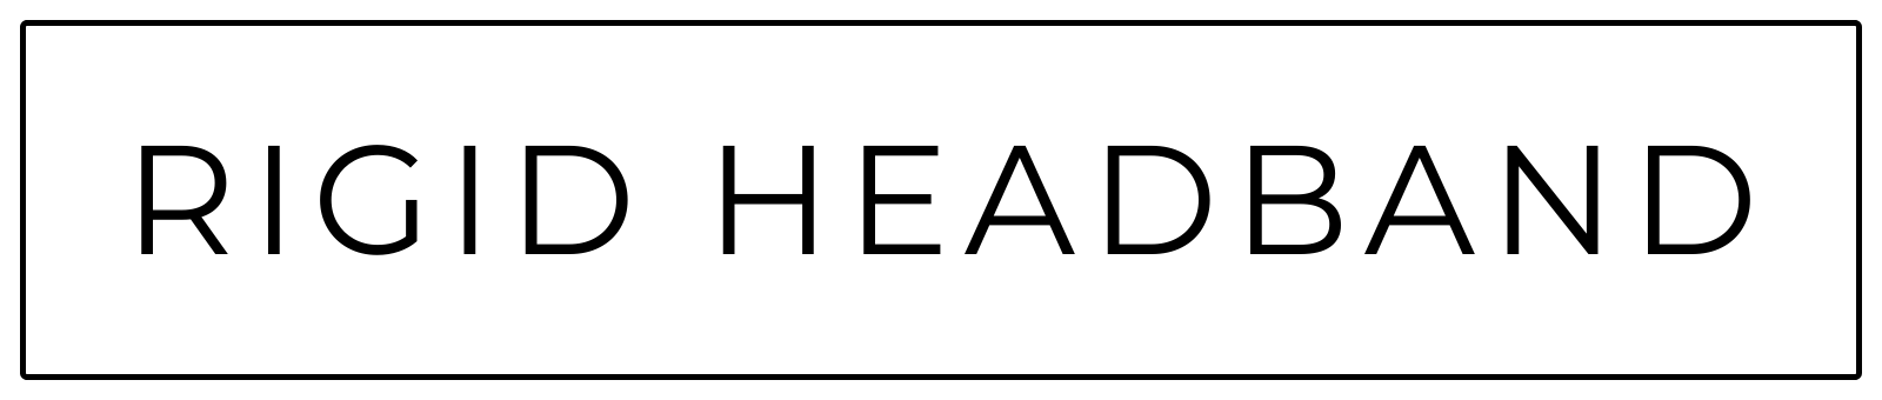 headband comparison